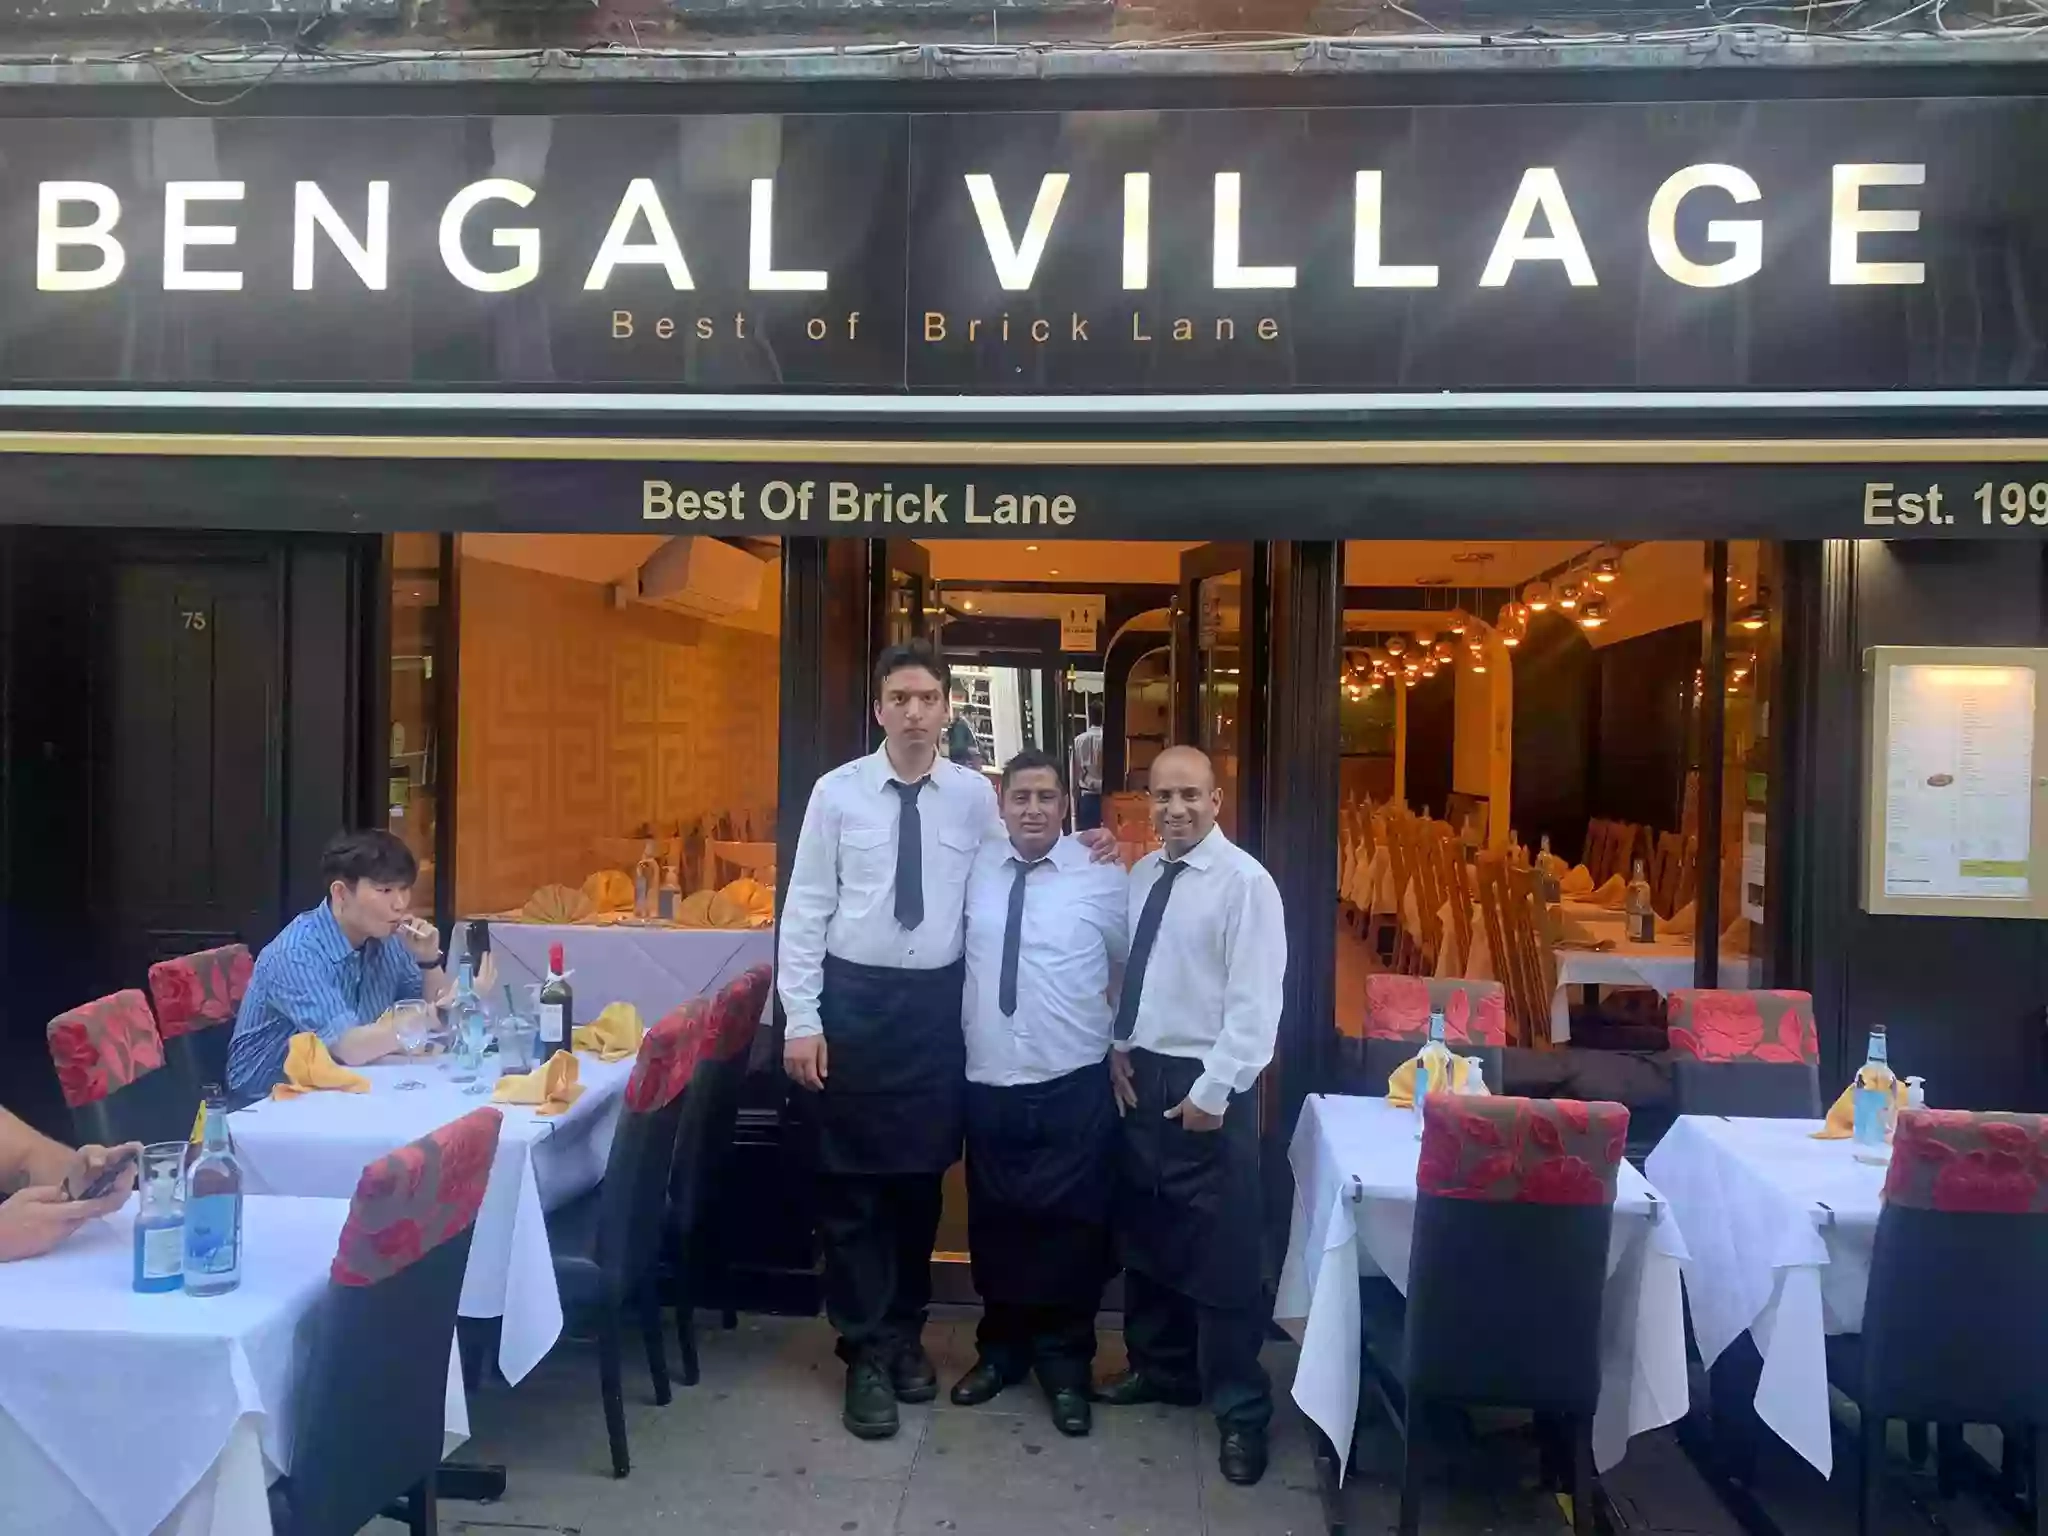 Bengal Village - Best of Brick Lane